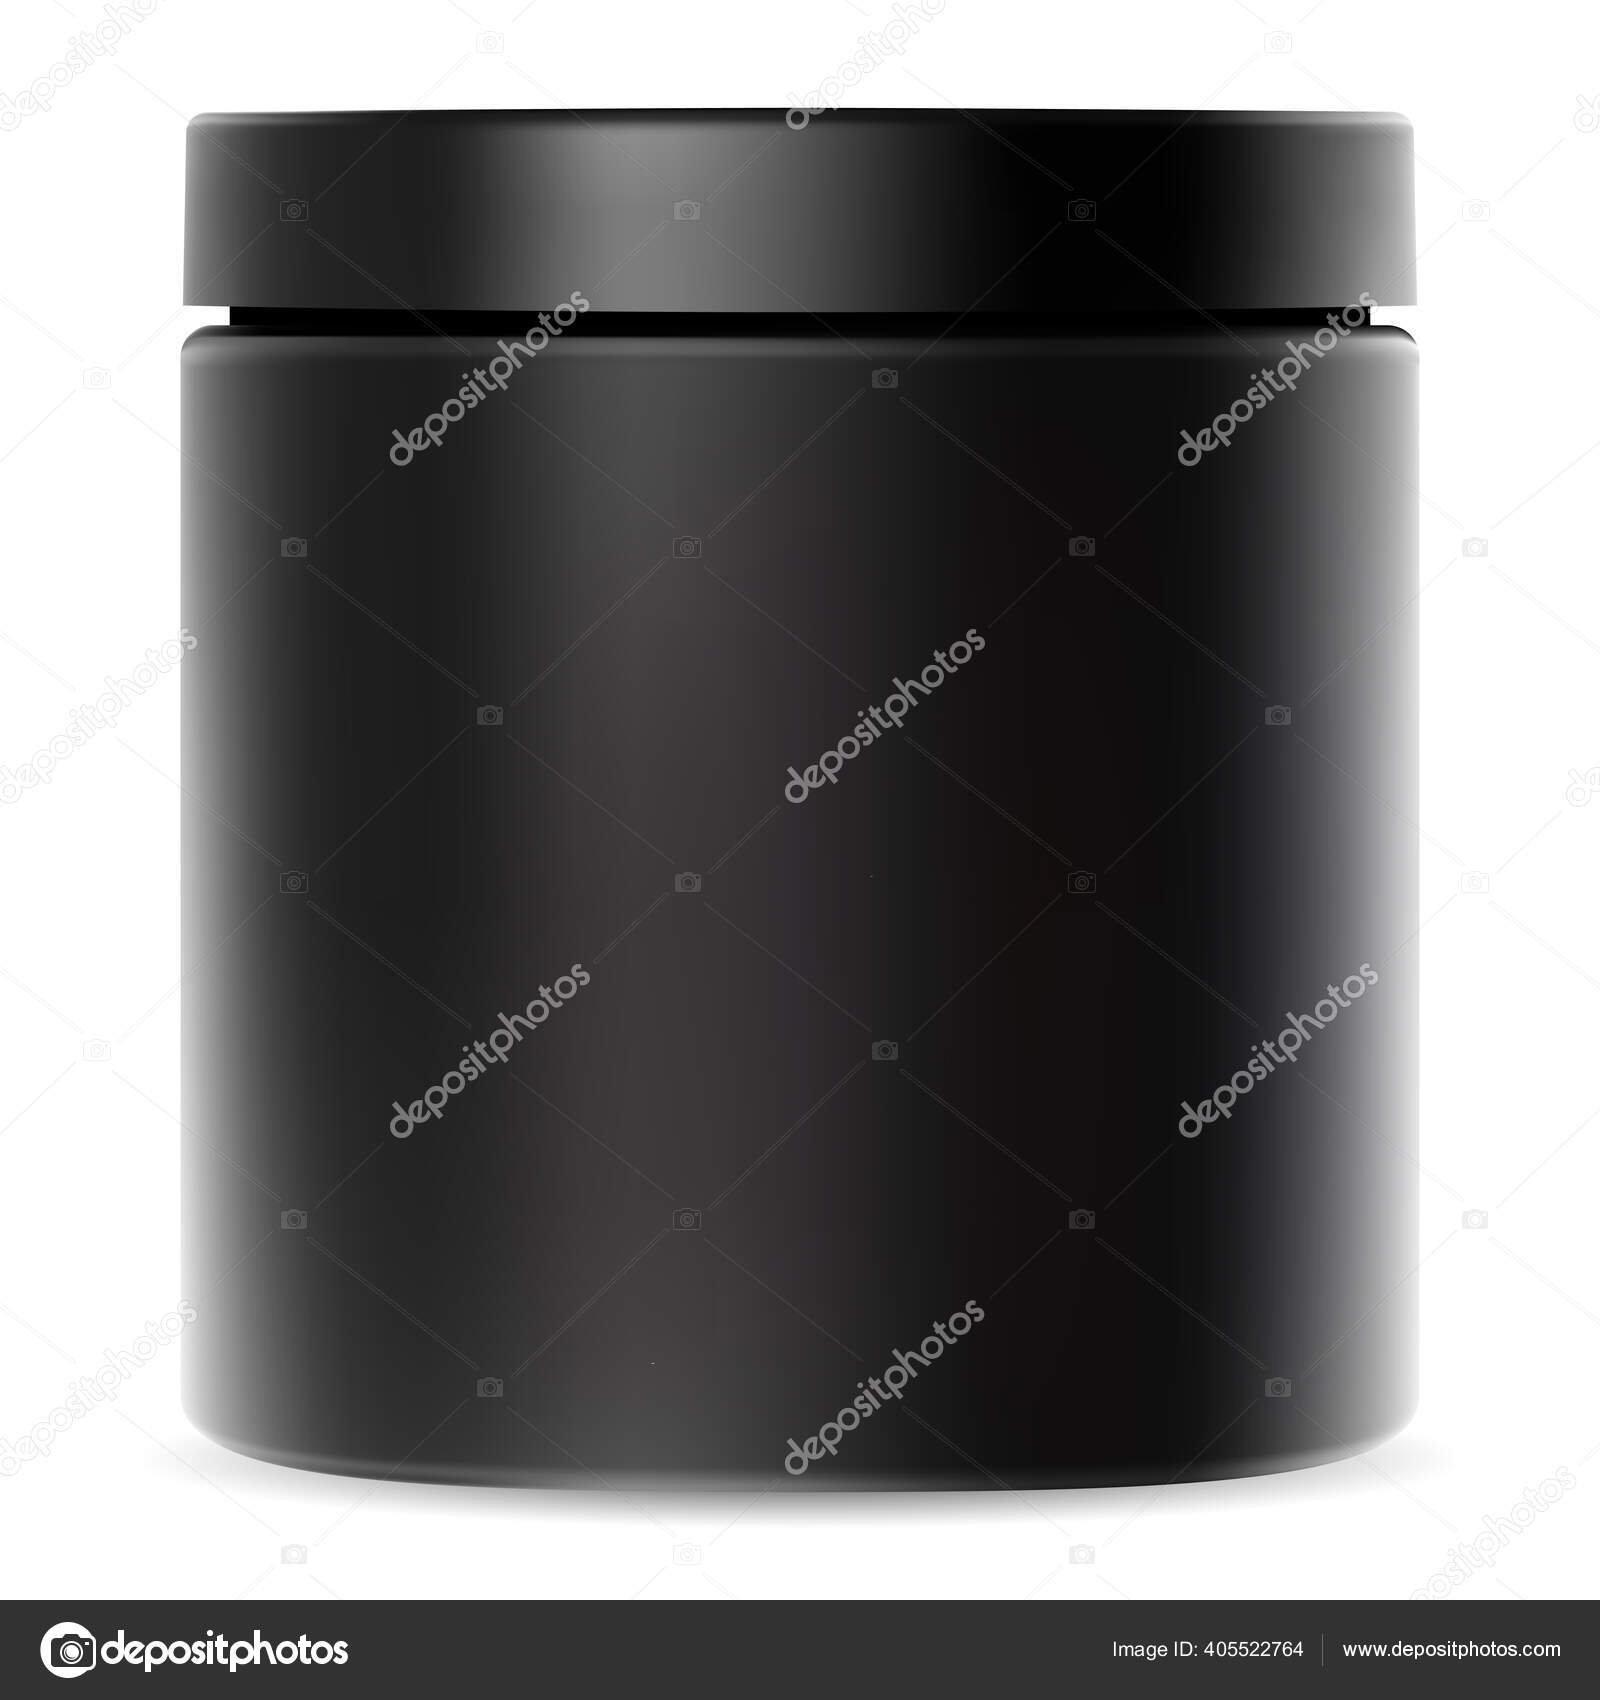 https://st4.depositphotos.com/18206890/40552/v/1600/depositphotos_405522764-stock-illustration-black-jar-plastic-container-cream.jpg